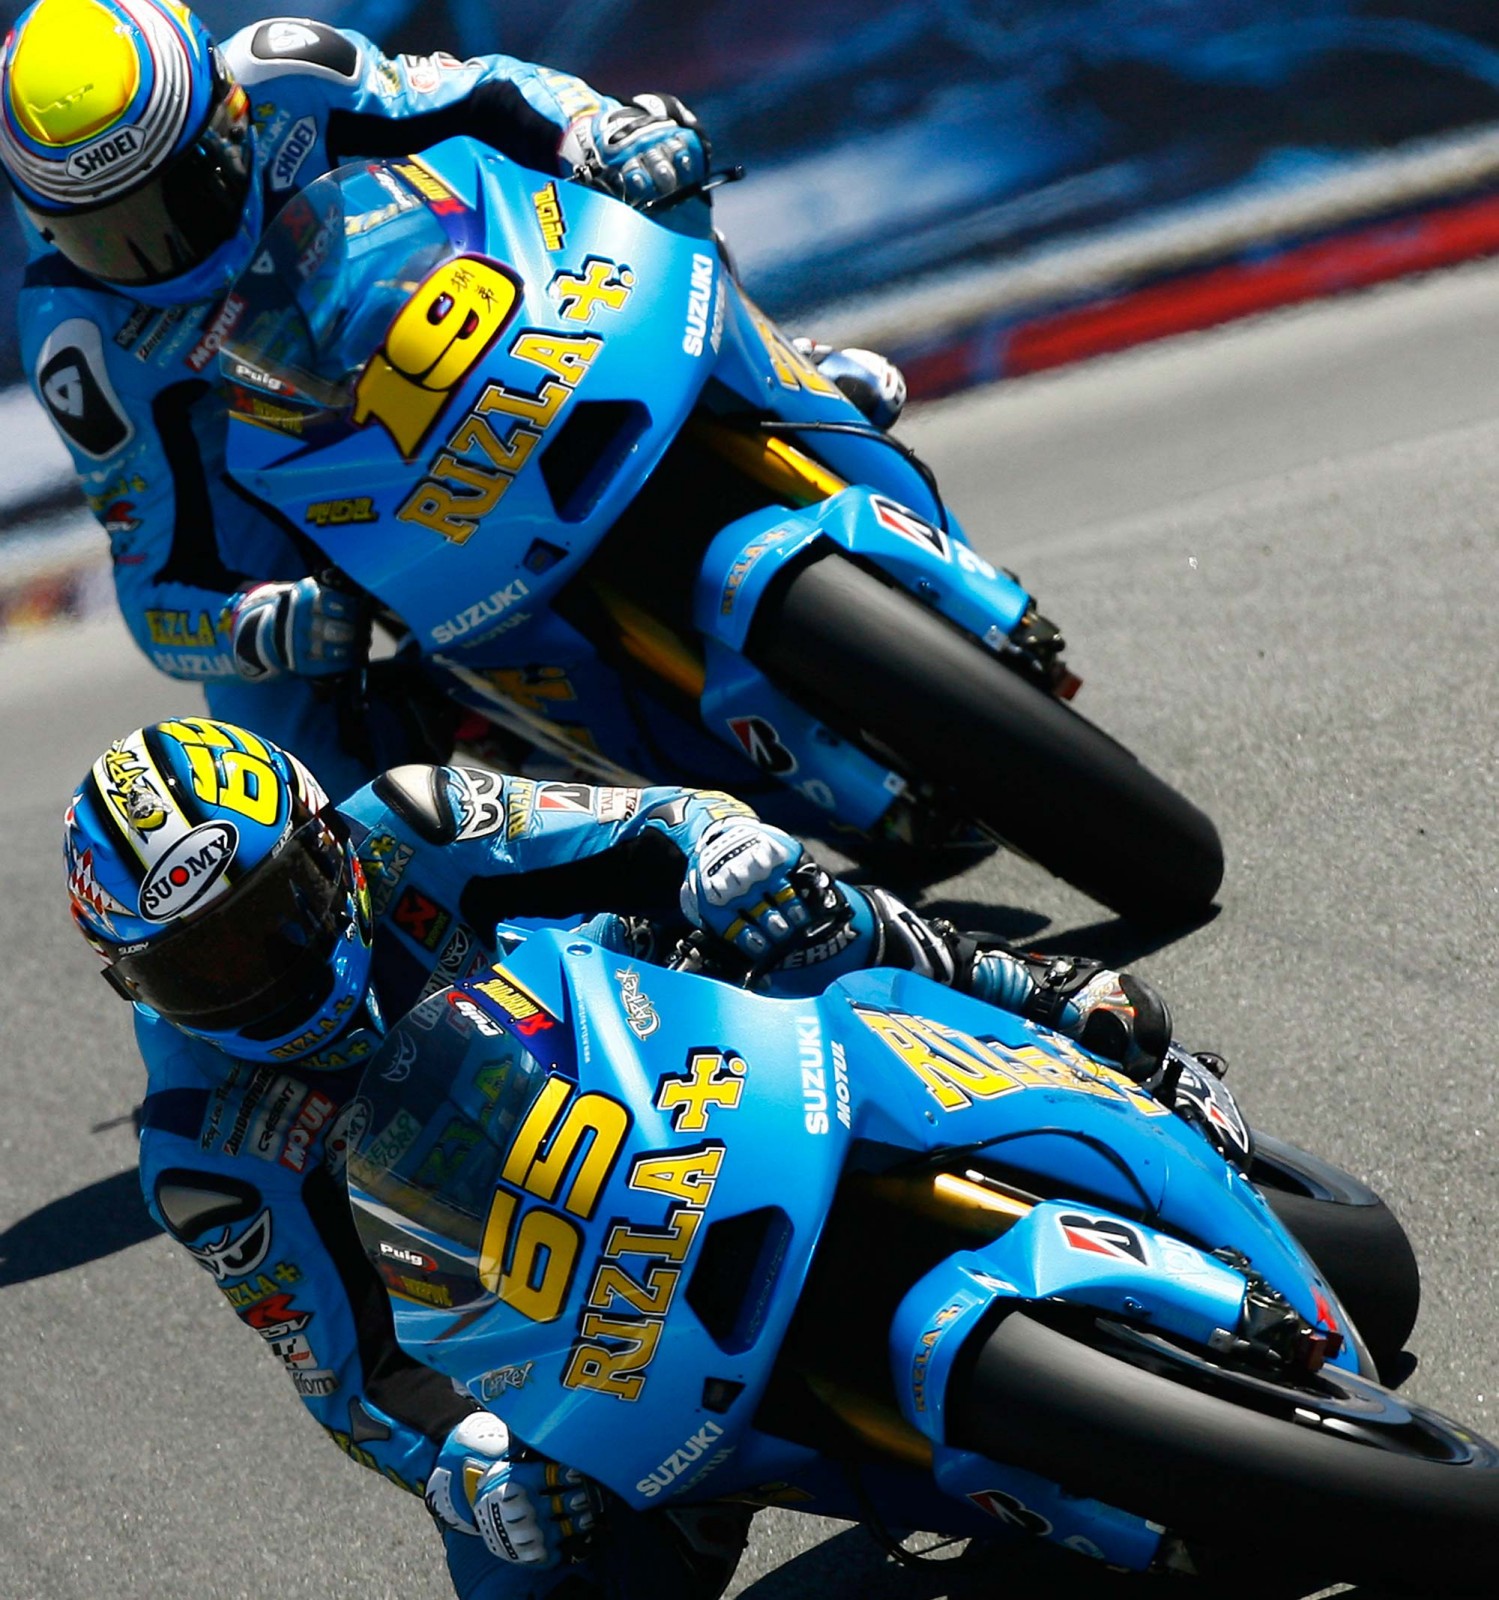 http://www.asphaltandrubber.com/wp-content/uploads/2010/08/Rizla-Suzuki-MotoGP-Laguna-Seca-corkscrew-1499x1600.jpg